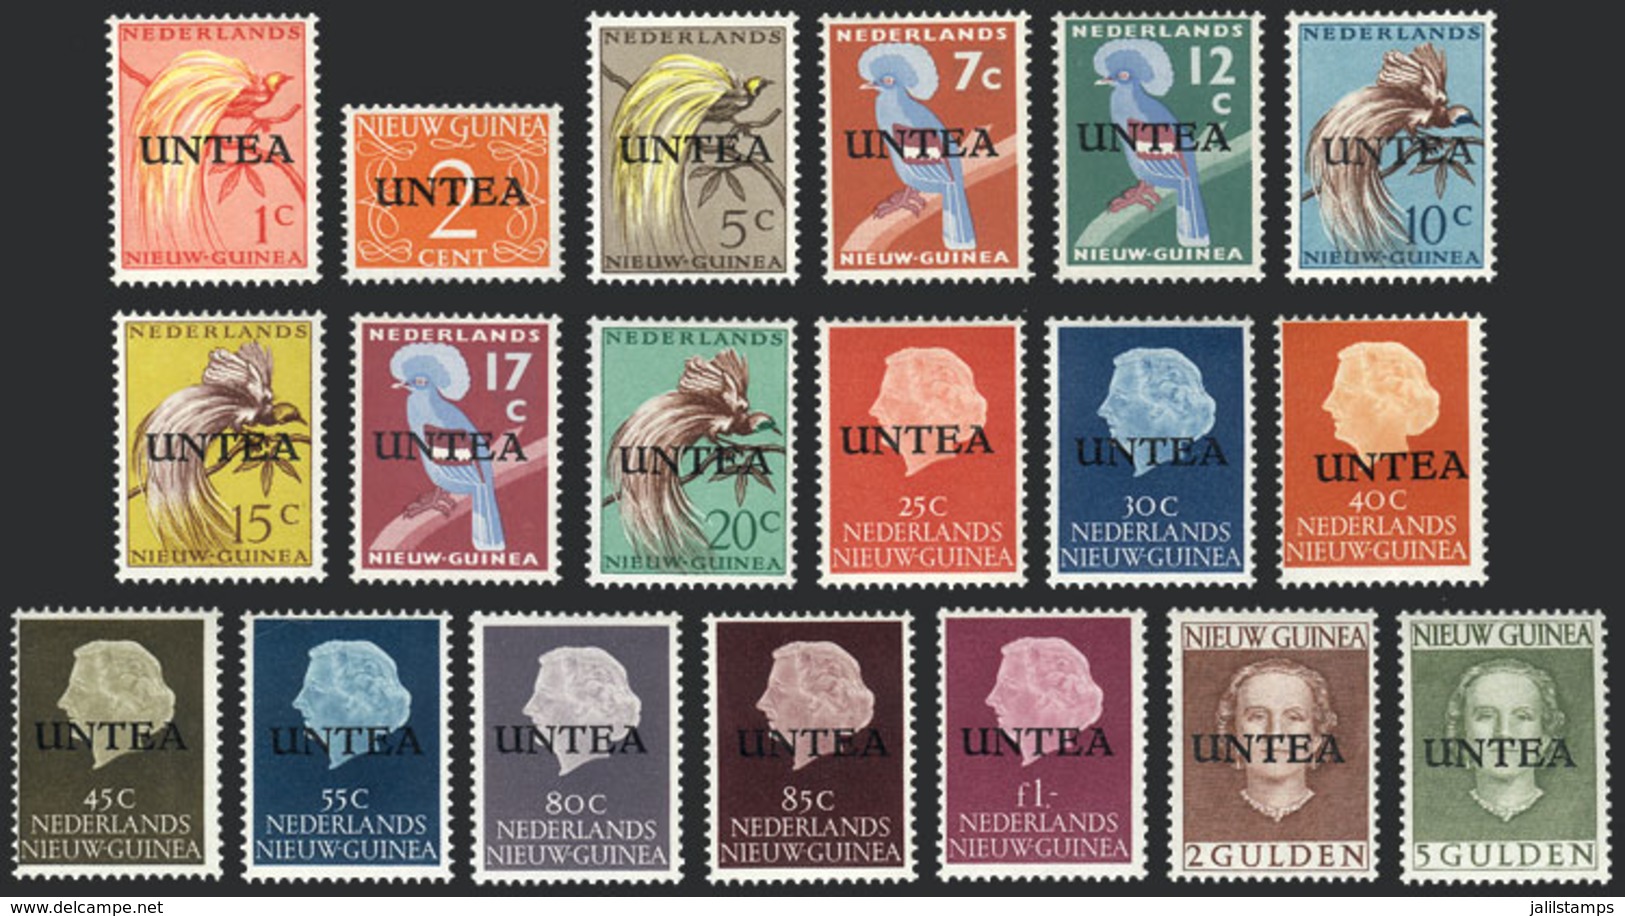 NETHERLANDS NEW GUINEA: Yvert 1/19, 1962 Complete Set Of 19 Overprinted Values, VF Quality! - Nouvelle Guinée Néerlandaise